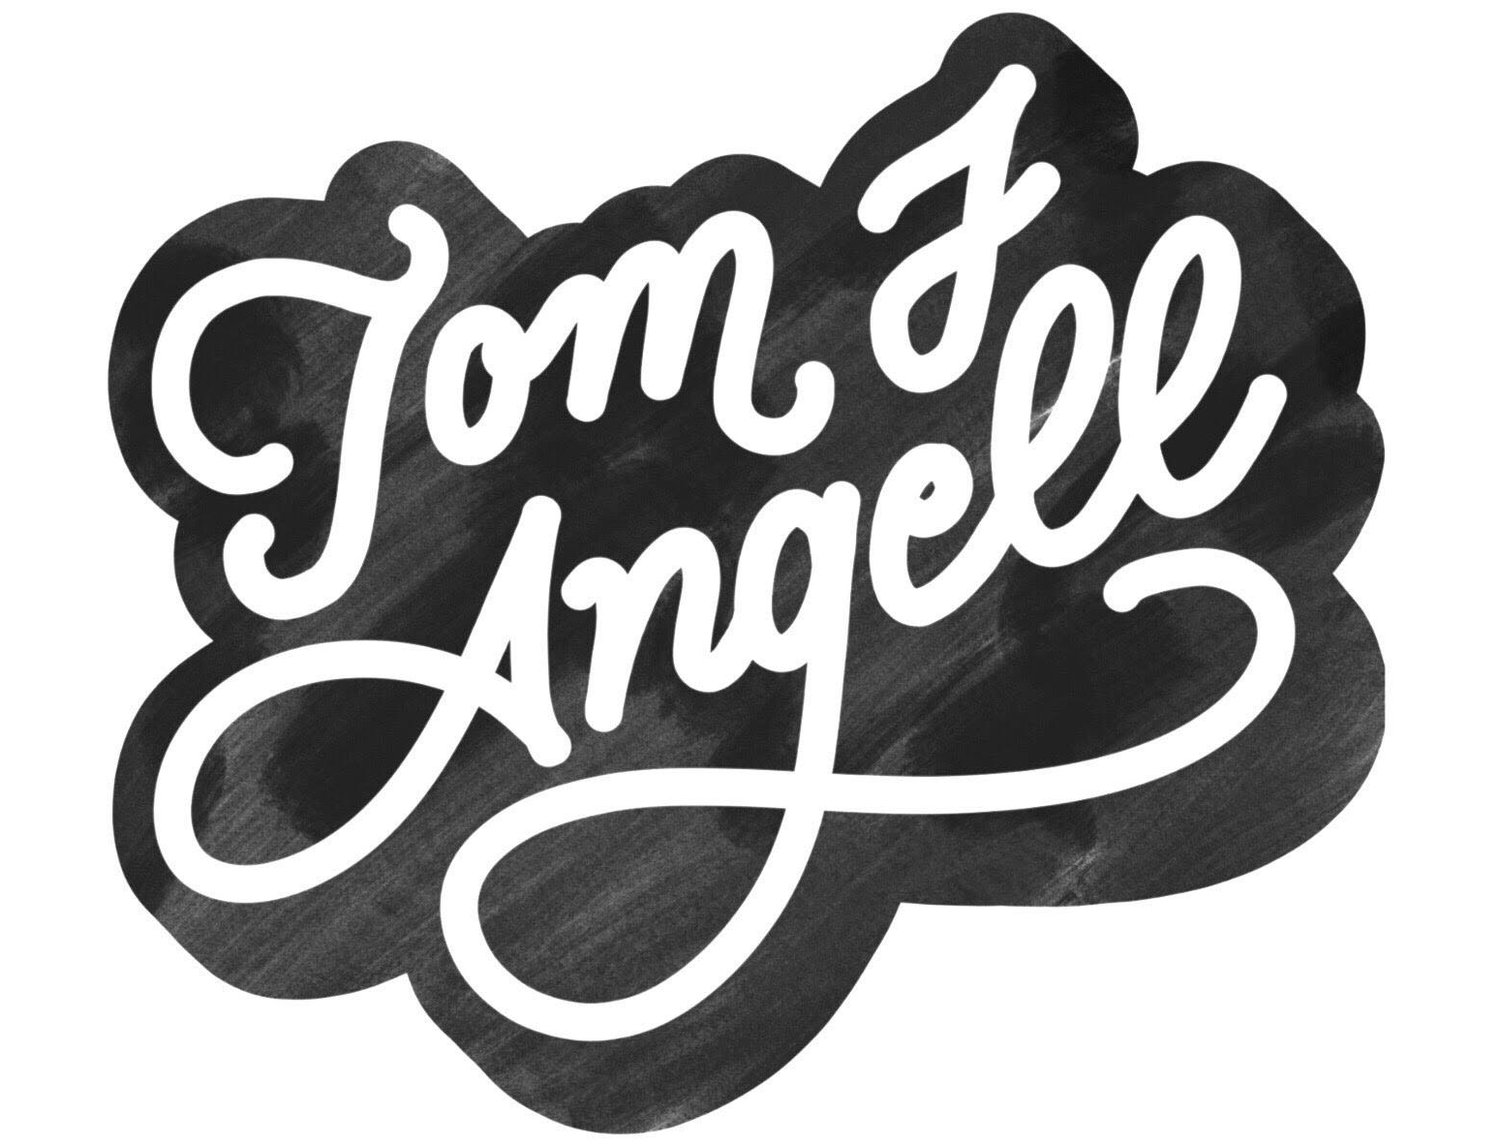 Tom J Angell